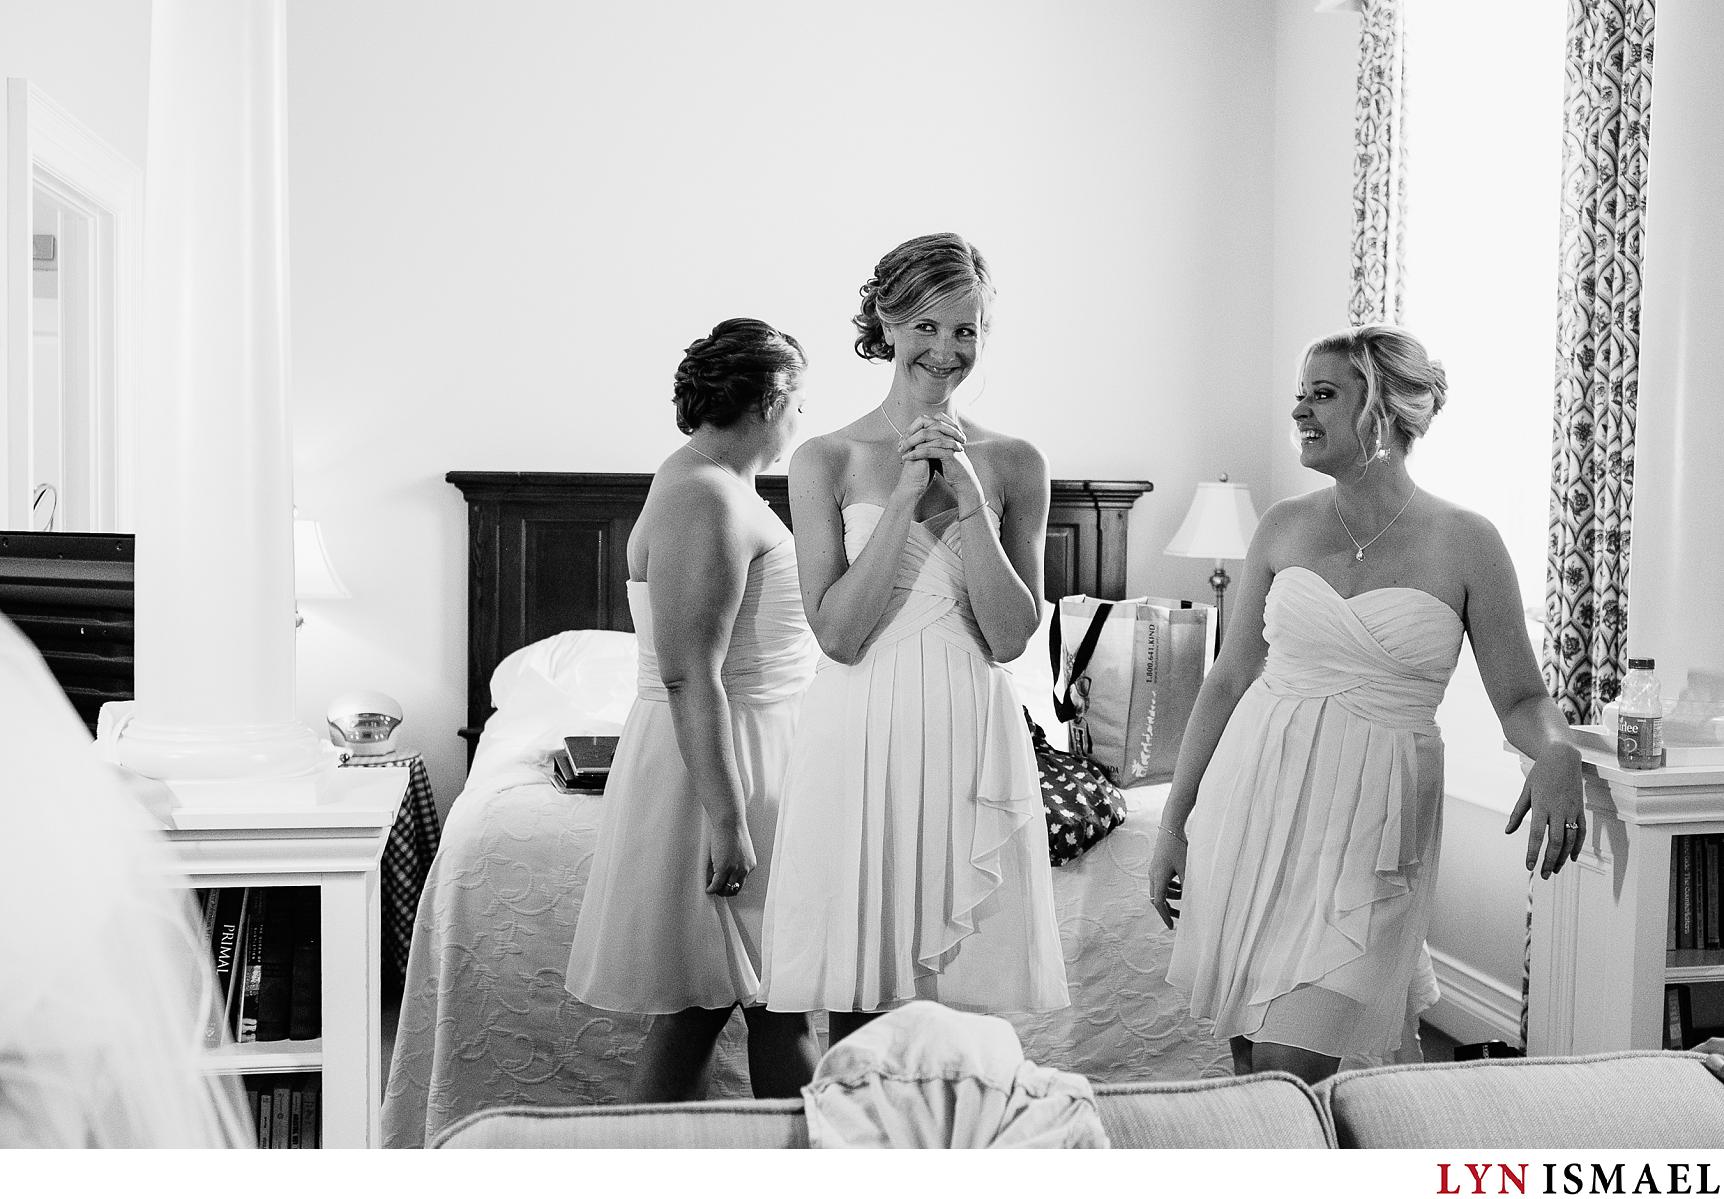 Bridesmaids watch their friend transform into a bride.